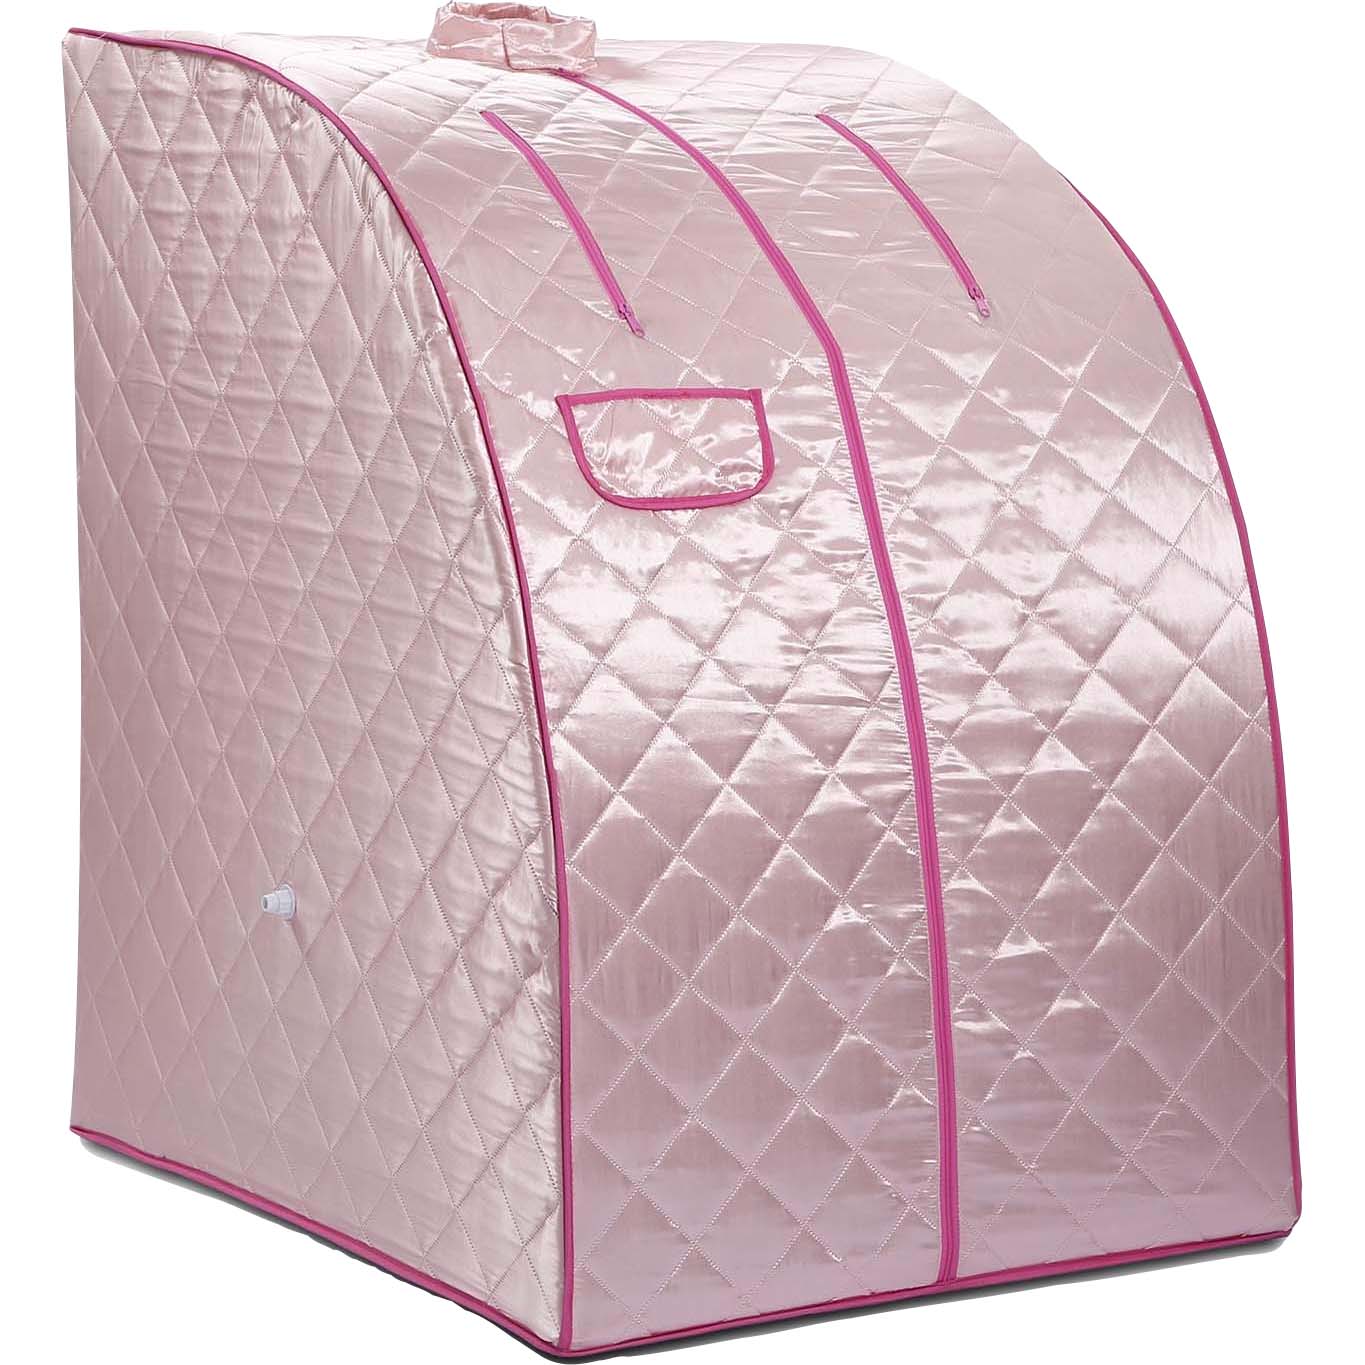 Laperva Portable Steam Sauna Room Pink